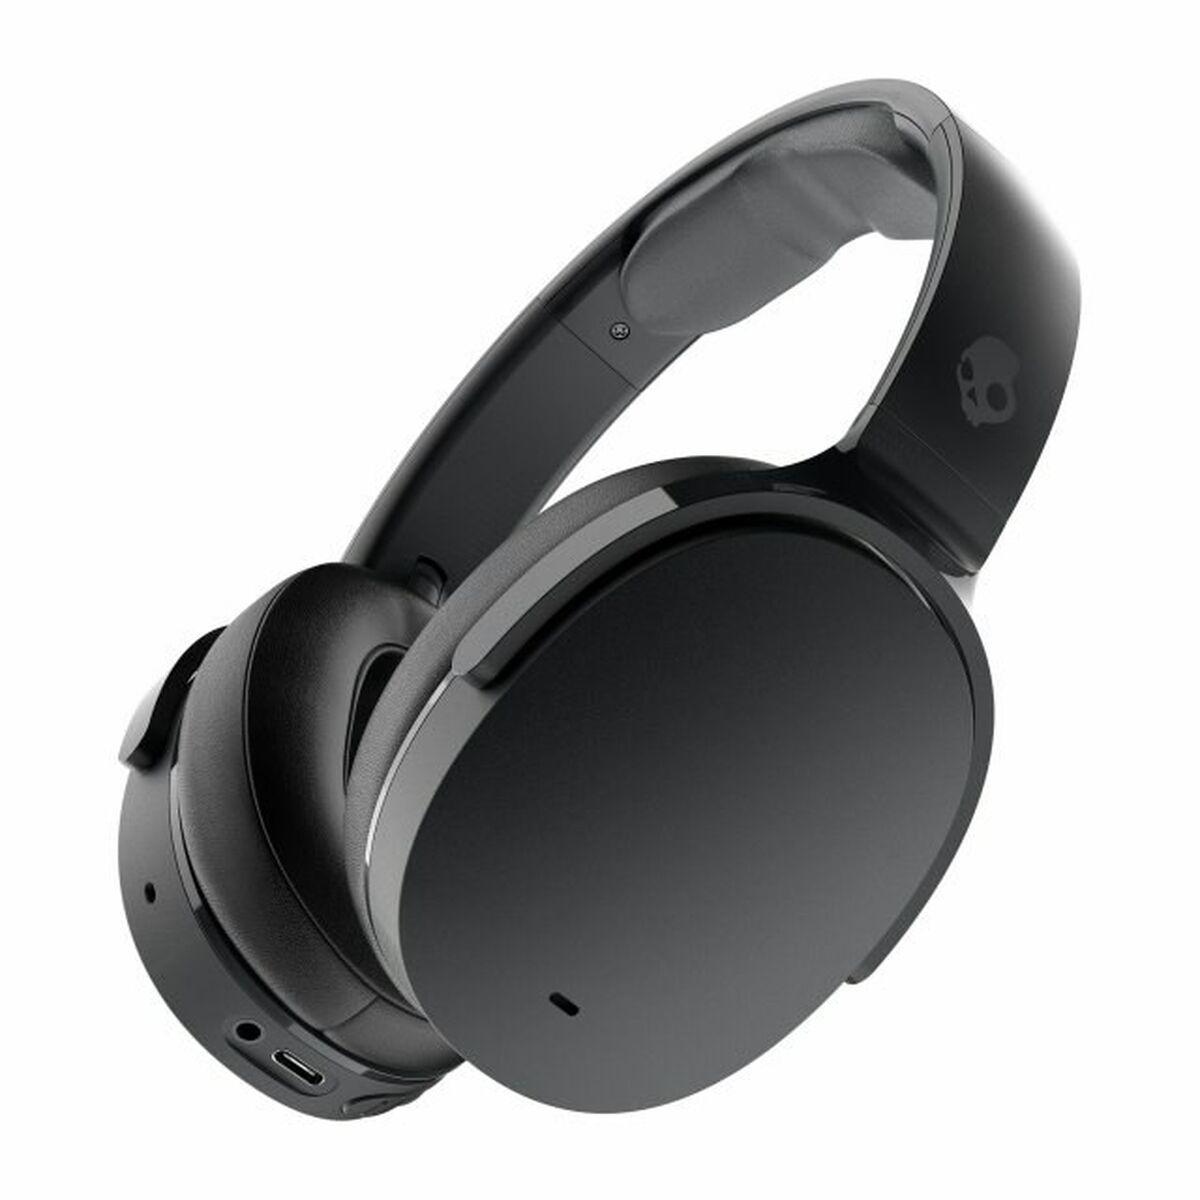 Auriculares Bluetooth Skullcandy S6hhw-n740 - negro - 